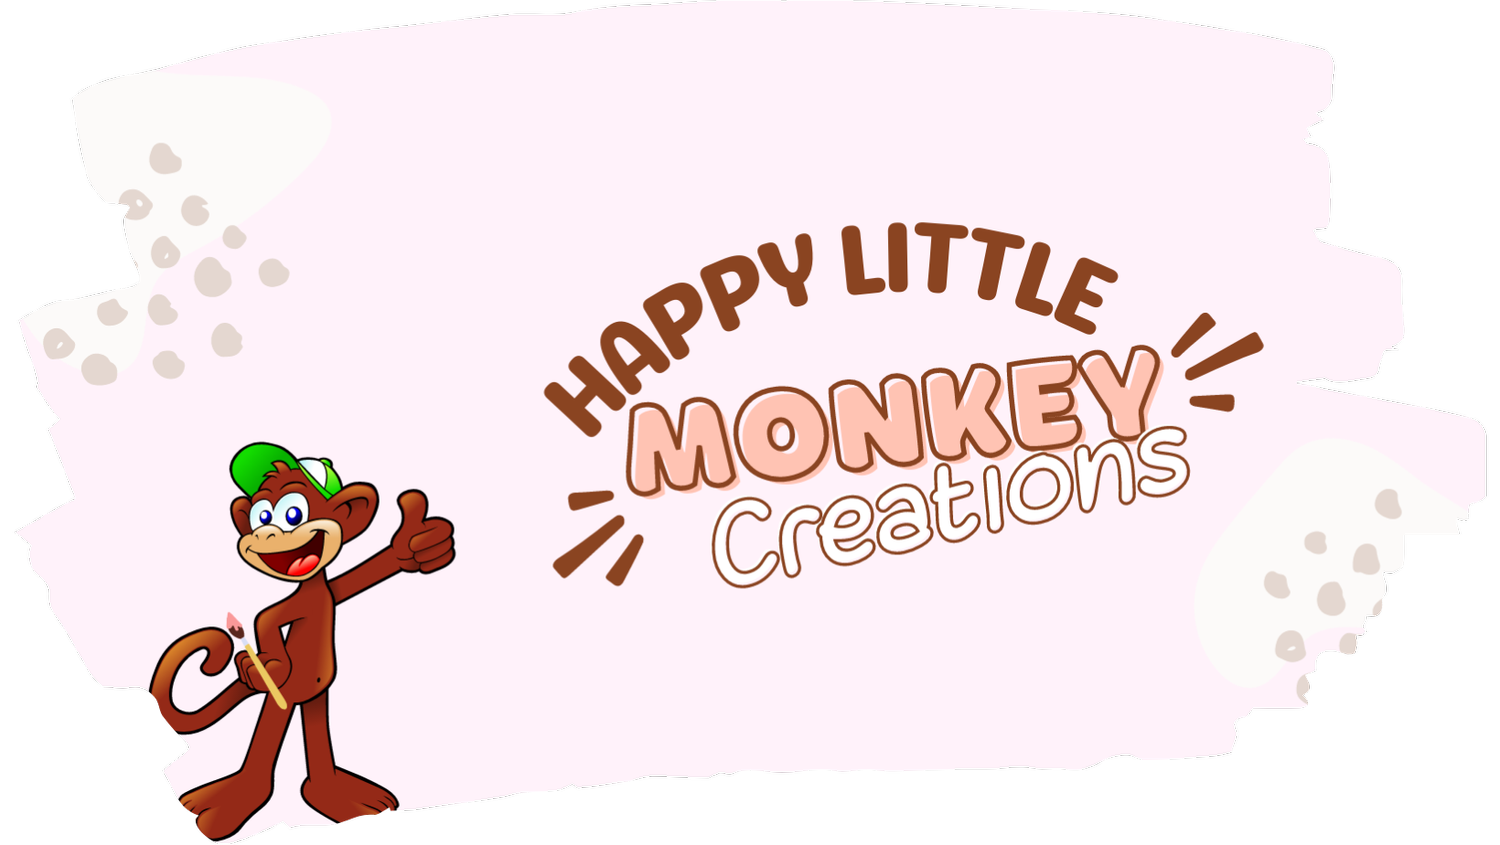 Happy Little Monkey Creations